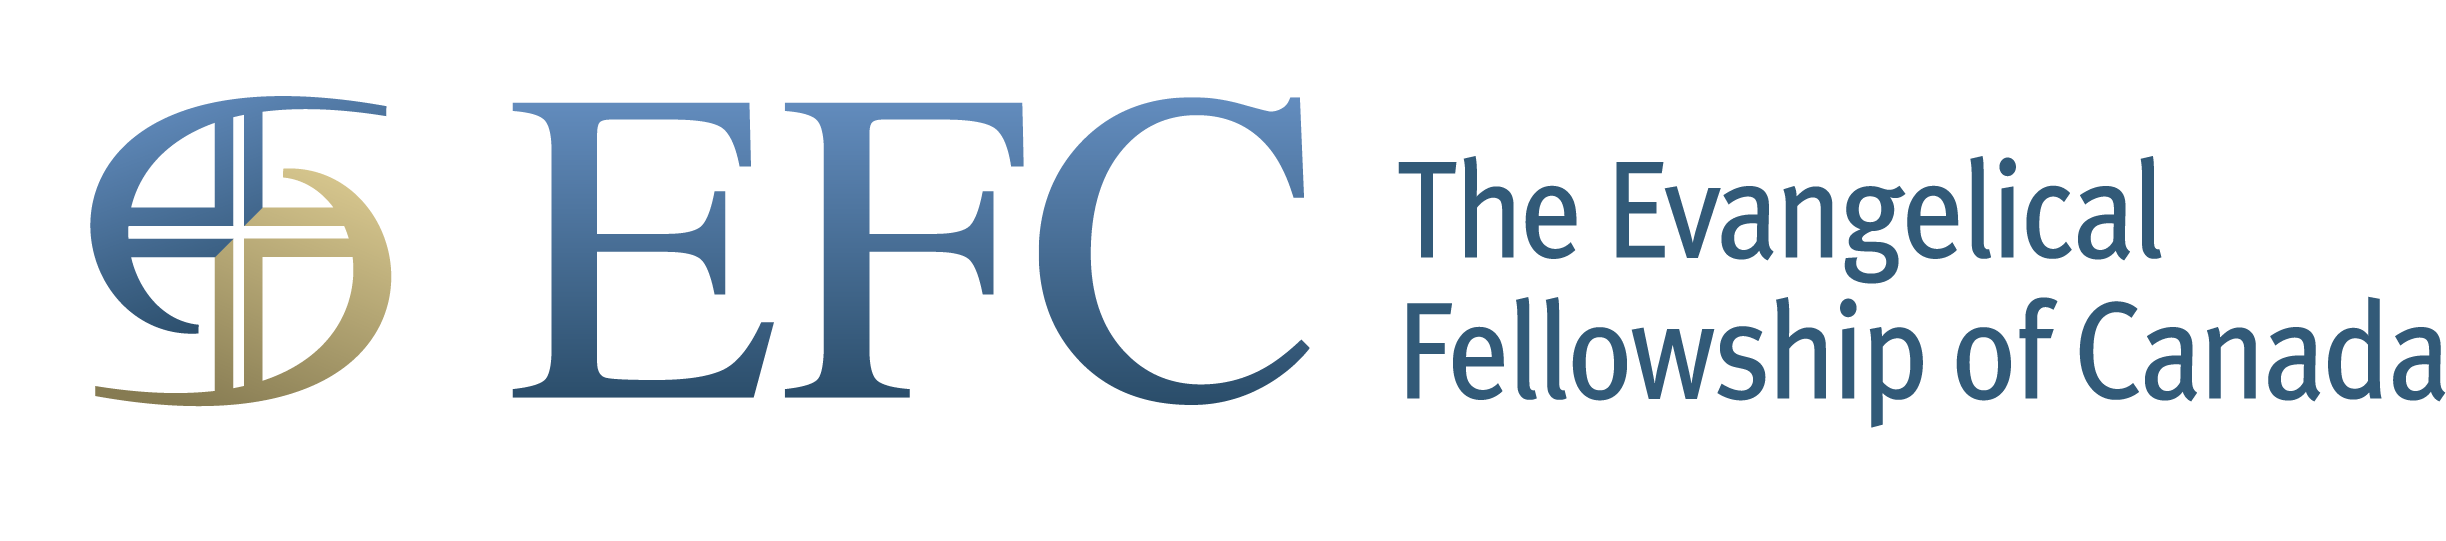 The Evangelical Fellowship of Canada logo